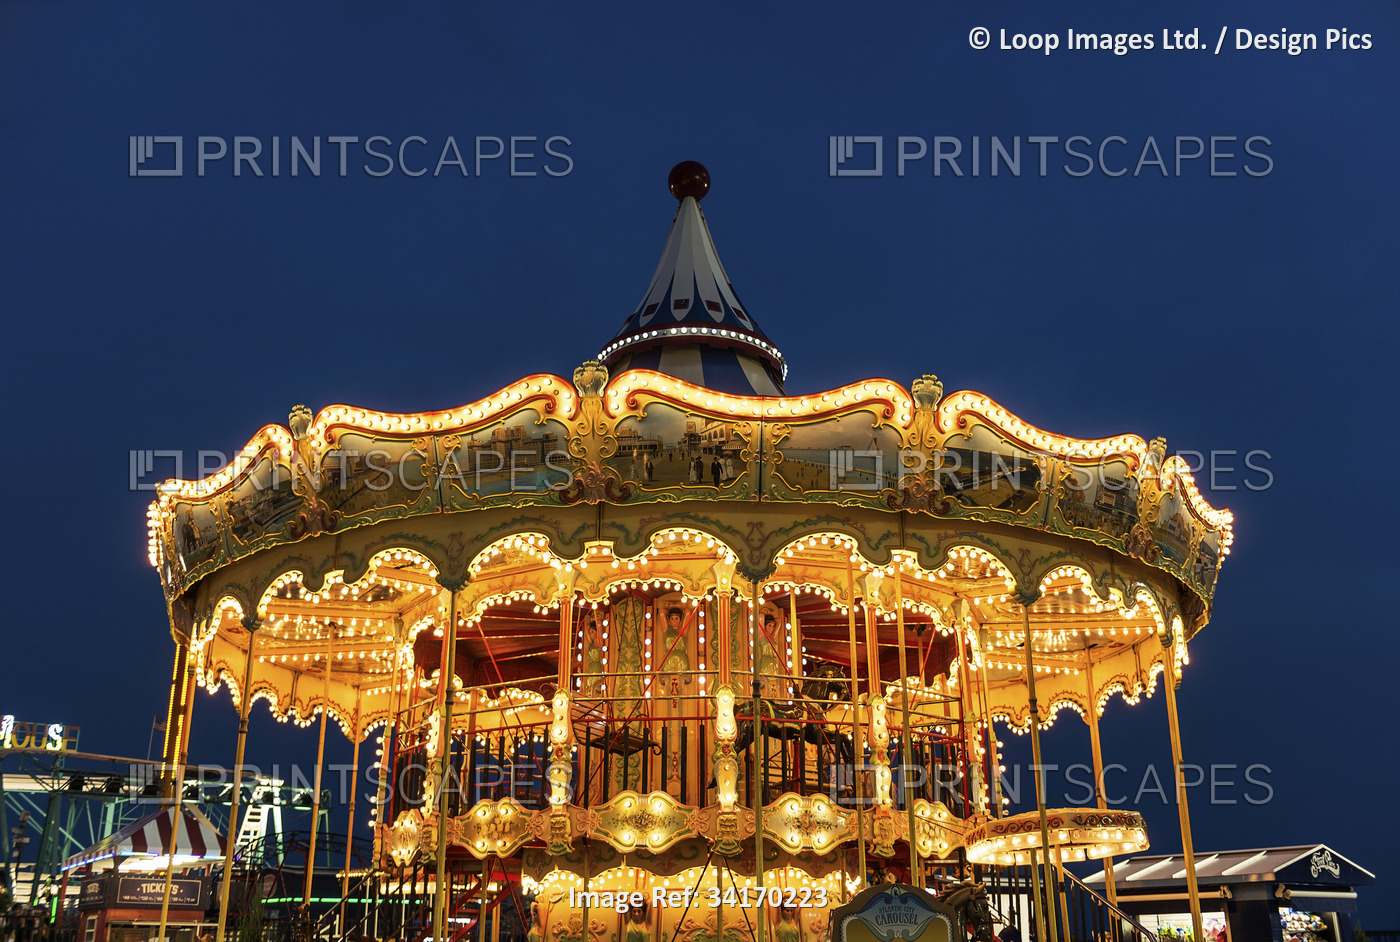 Carousel amusement ride in Atlantic City.